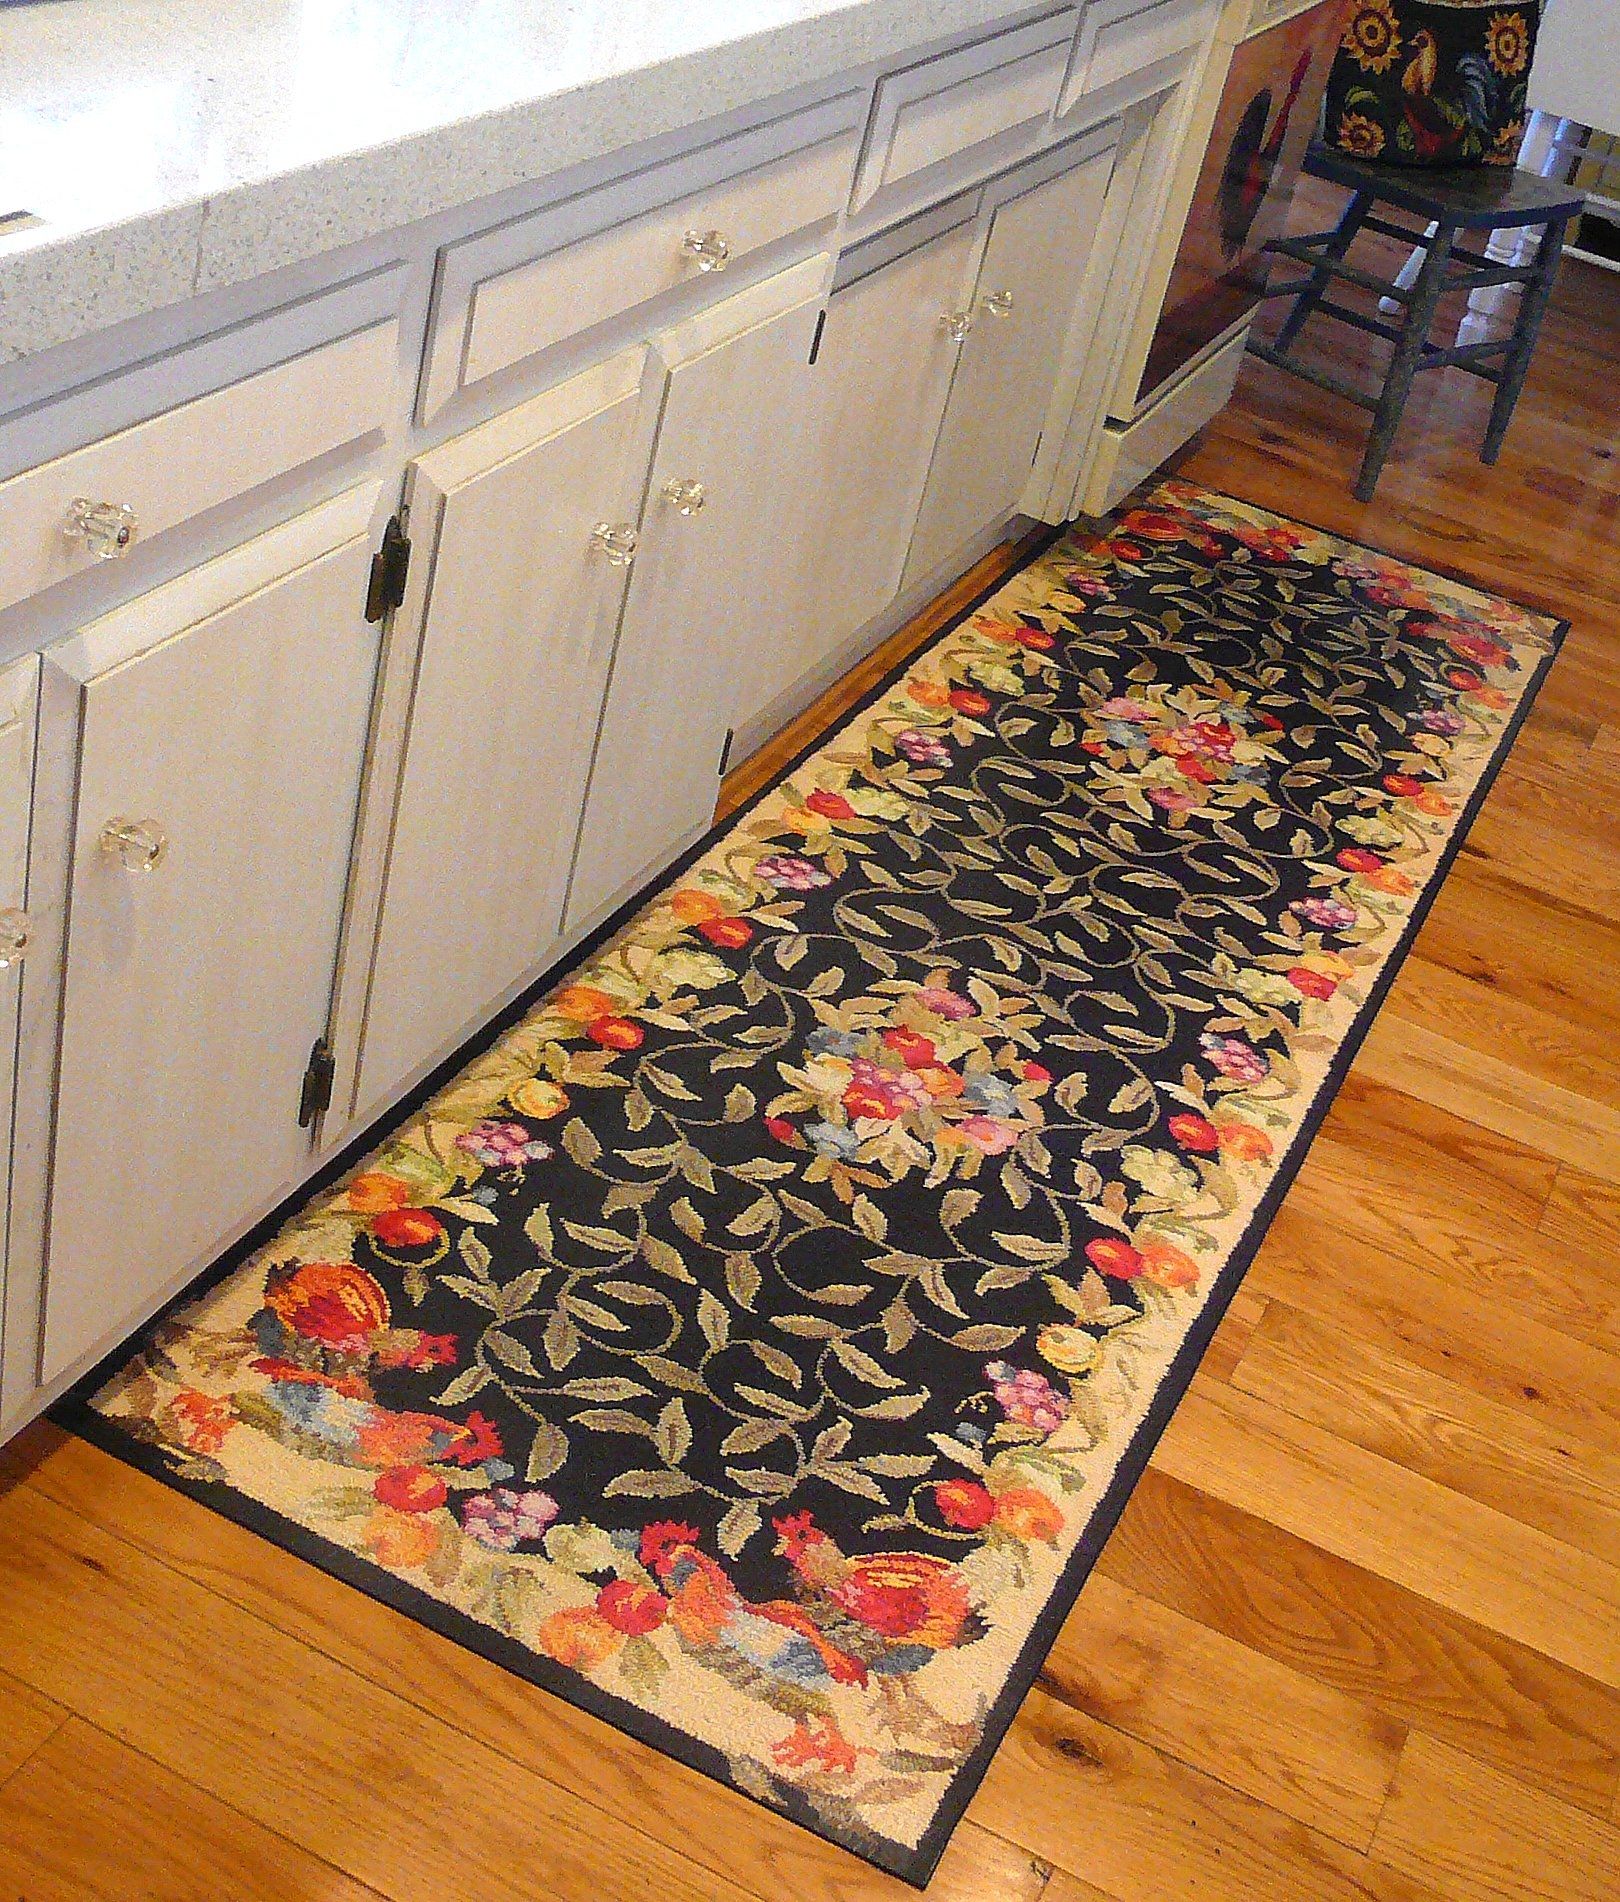 Kitchen Backsplash Tile Carpet Runners For Kitchen Kitchen Sink With Washable Runner Rugs For Hallways (Photo 15 of 20)